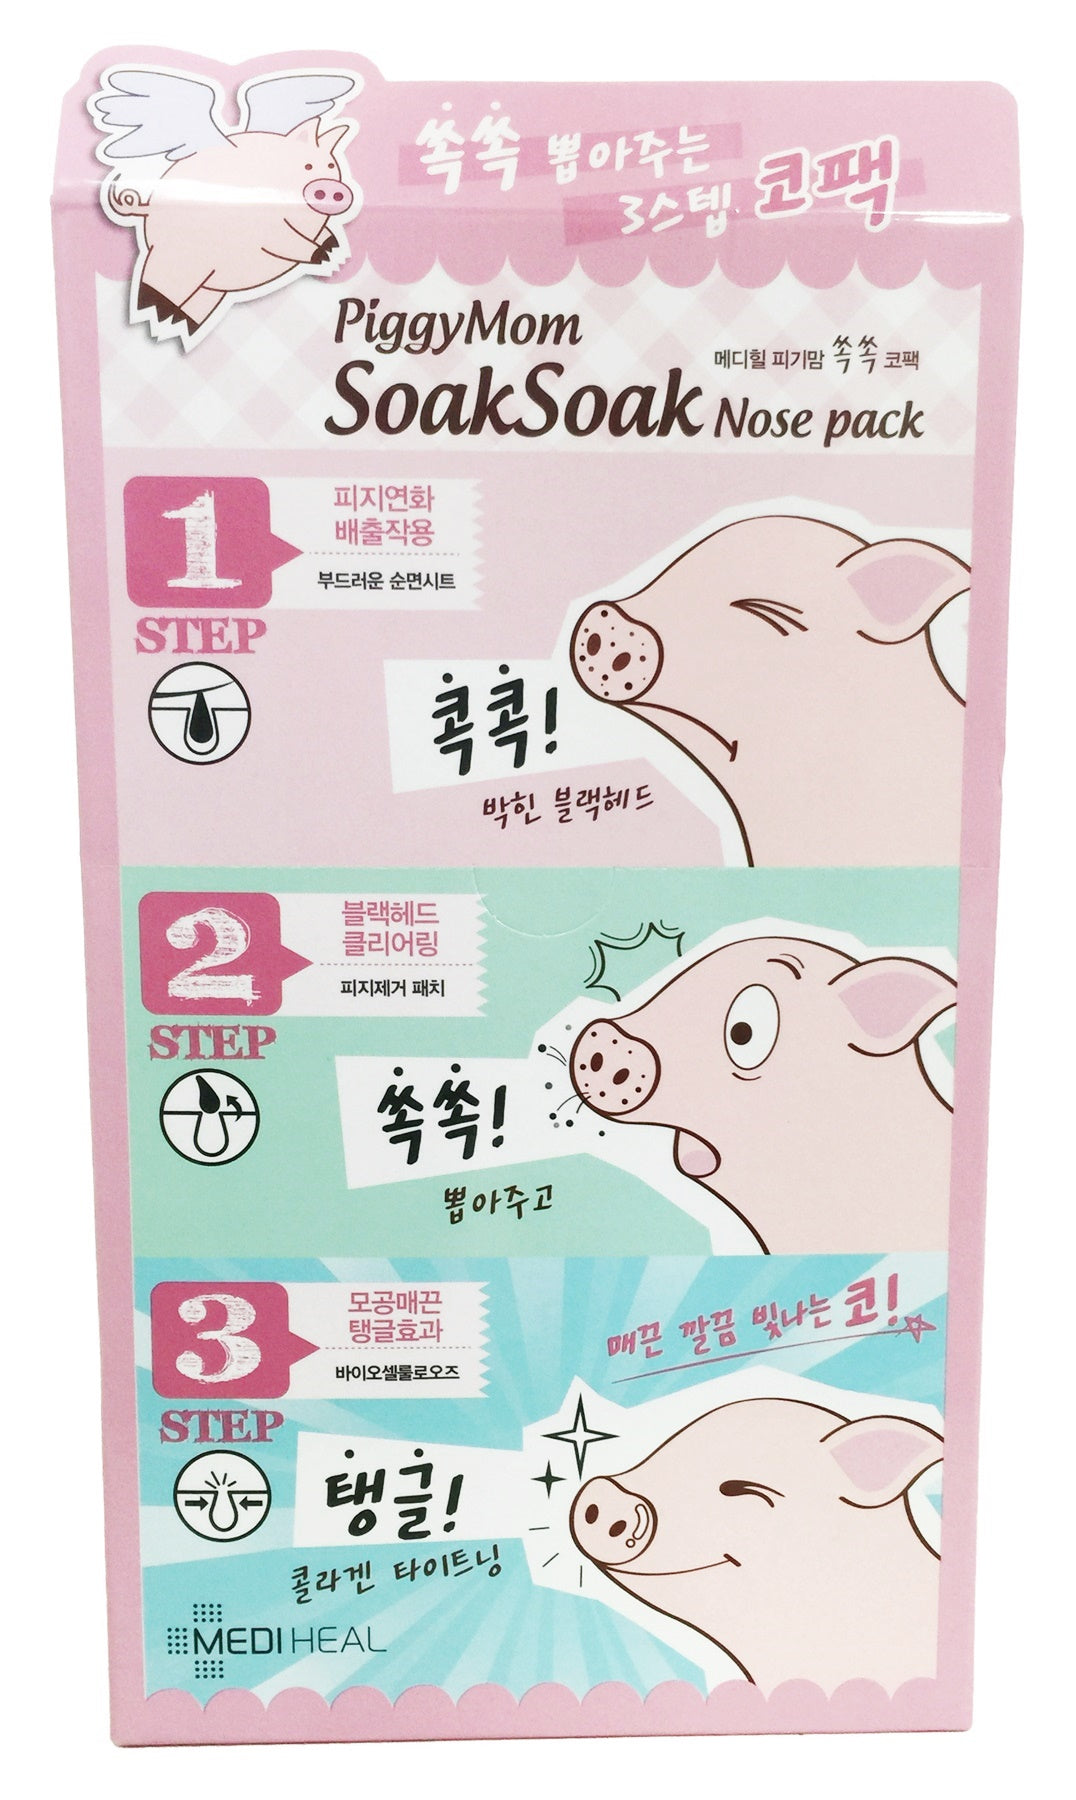 Mediheal Piggy Mom SoakSoak Nose Pack 10 Sheets